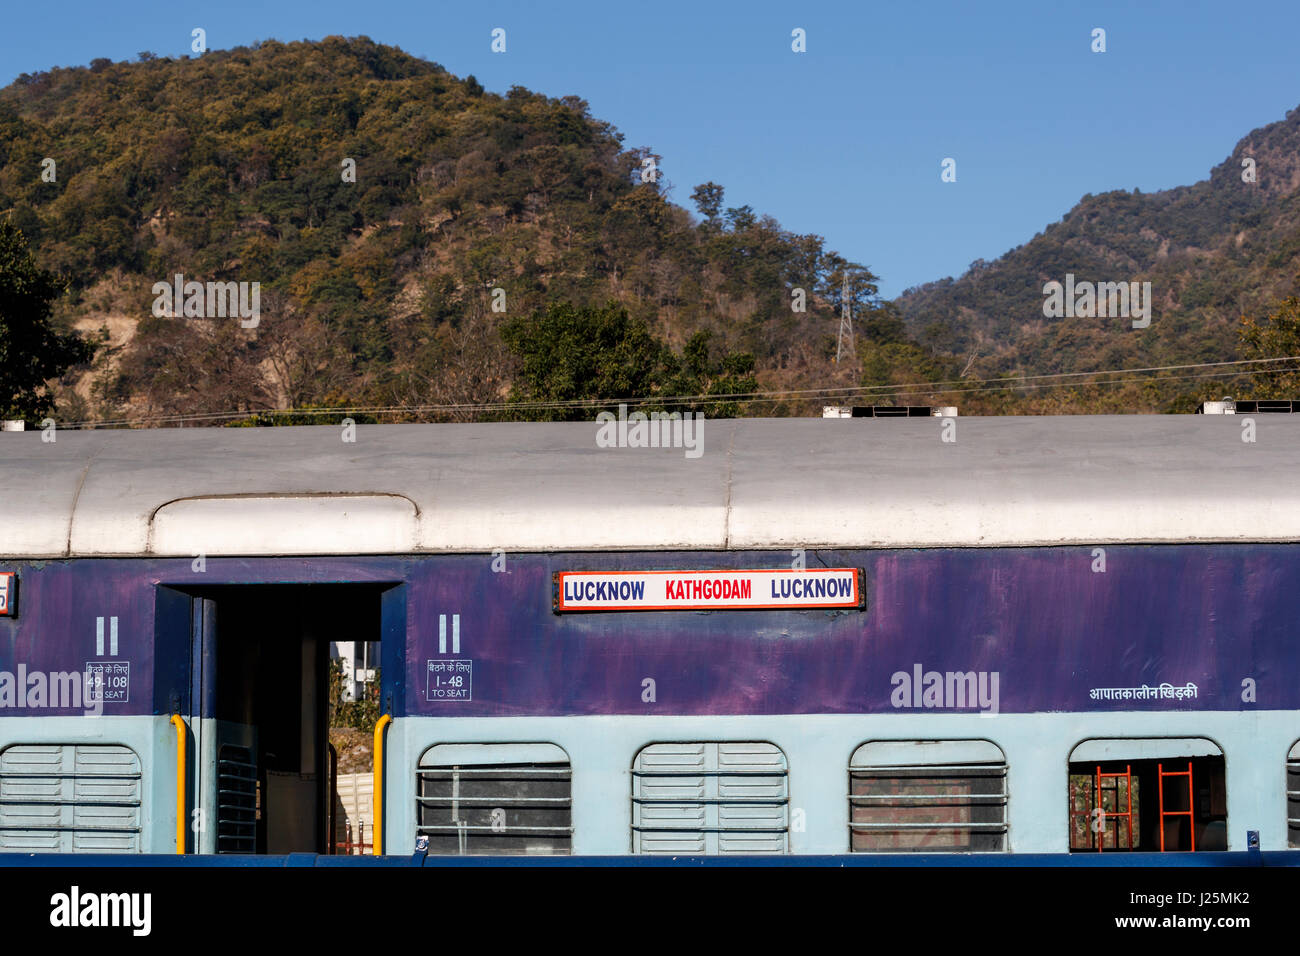 Indian railways train carriages, Kathgodam Station, Nainital District, Uttarakand, northern India, destination boards for the Lucknow - Kathgodam line Stock Photo